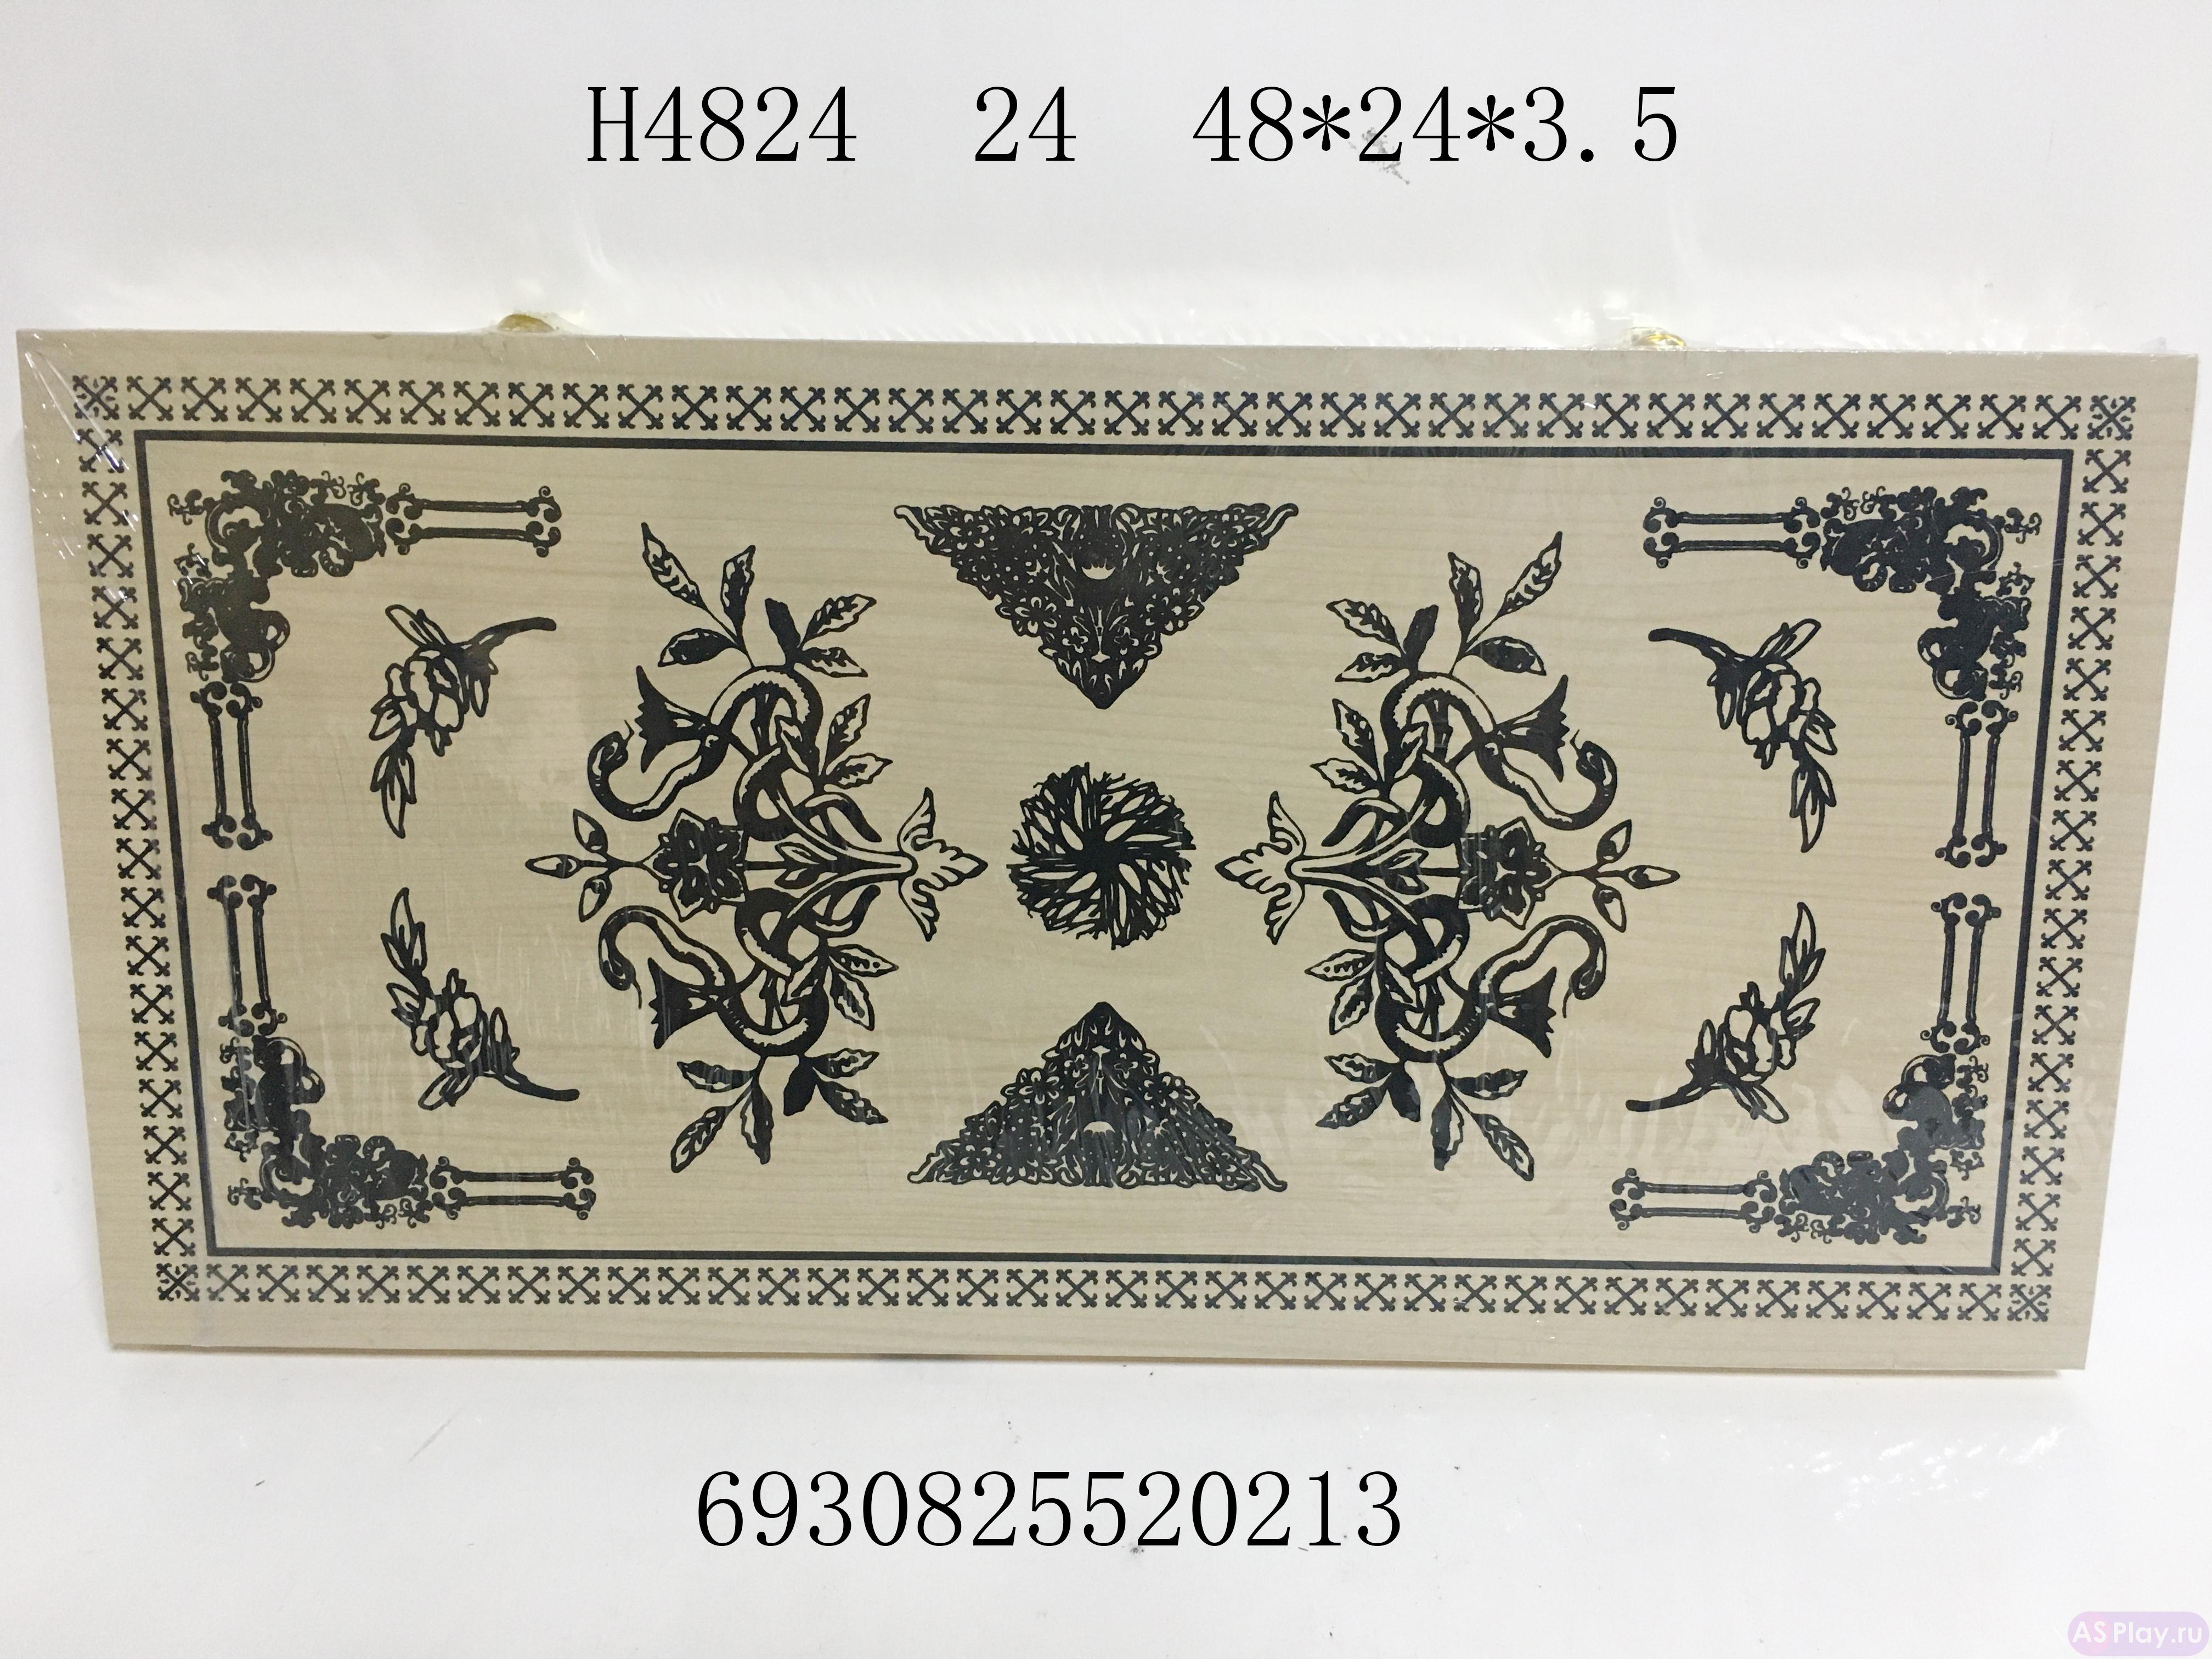 H4824 Набор 3 в 1 (нарды, шахматы, шашки), 24 шт. в кор.  H4824